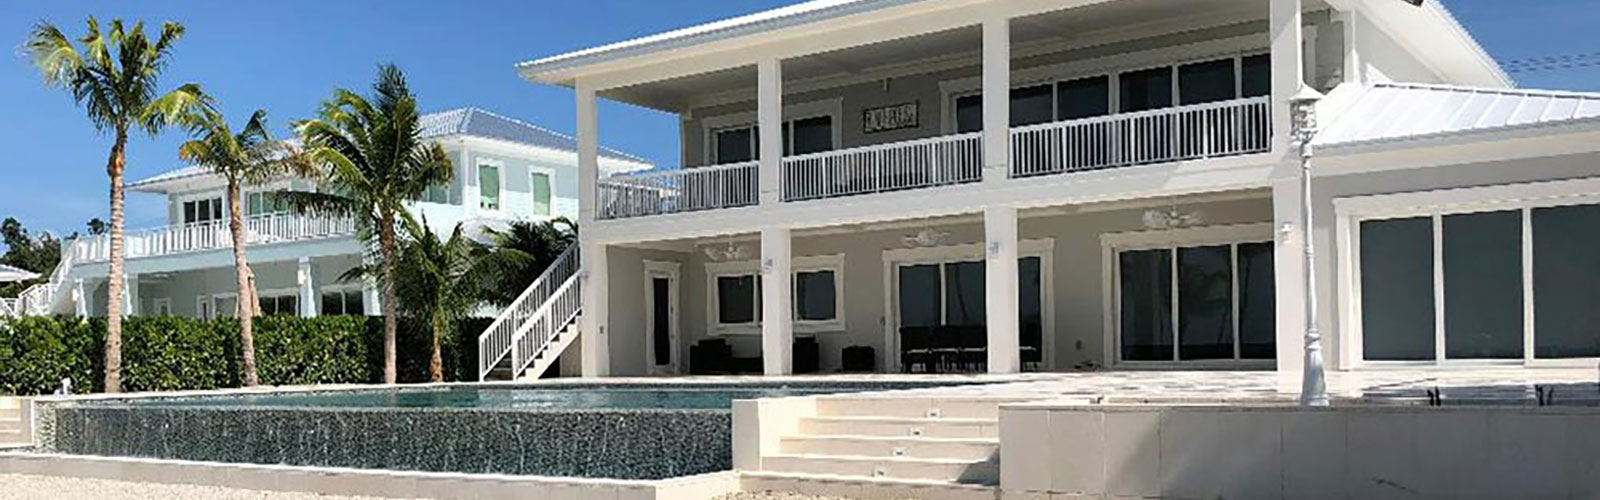 Custom Home in the Florida Keys